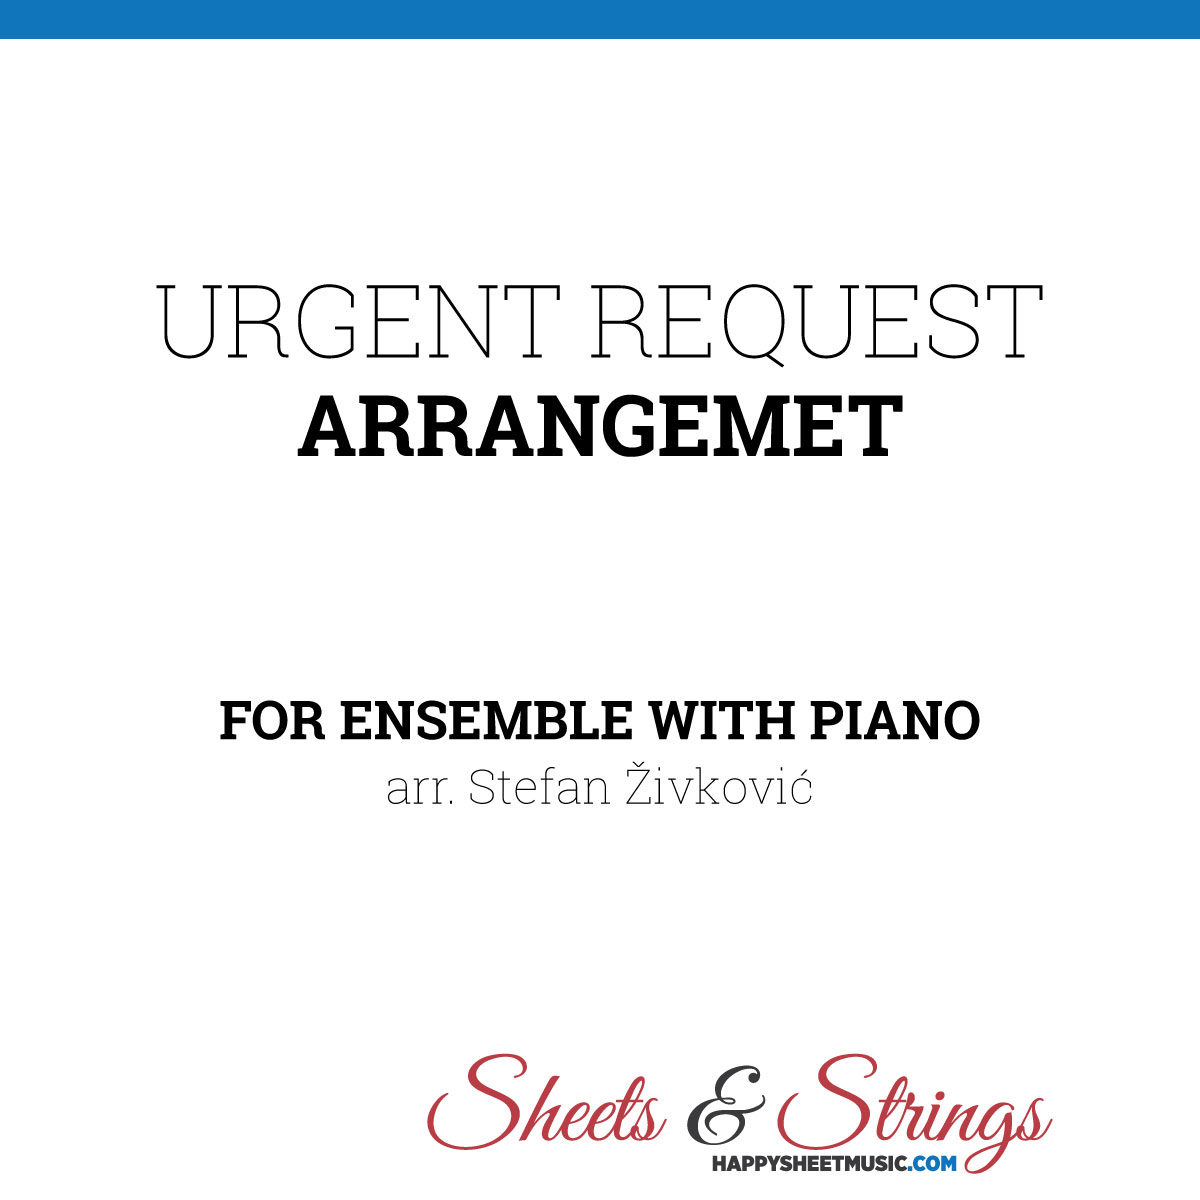 Urgent Request for ensemble with Piano music arrangement